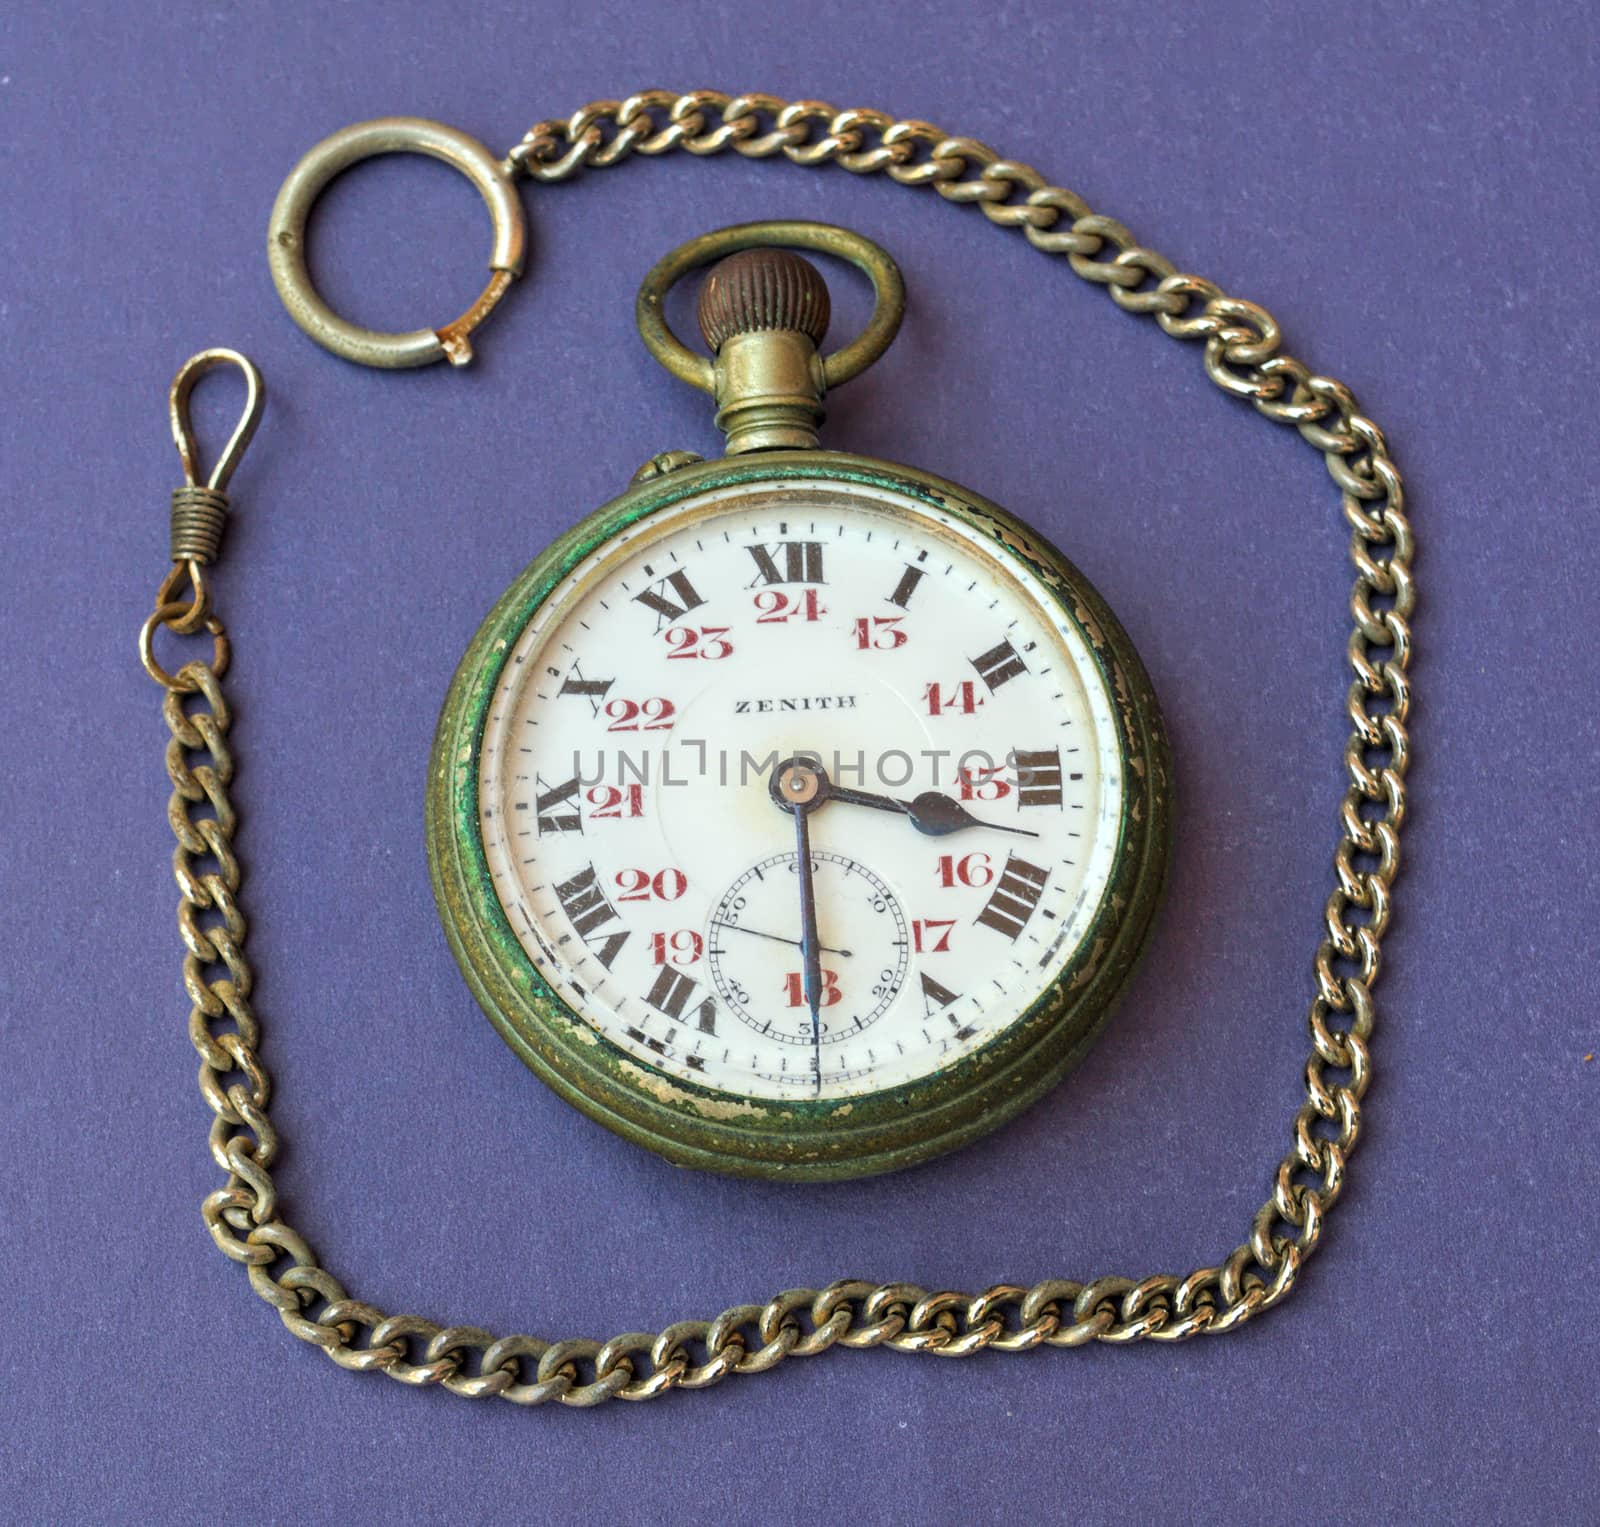 Old antique pocket watch by sheriffkule